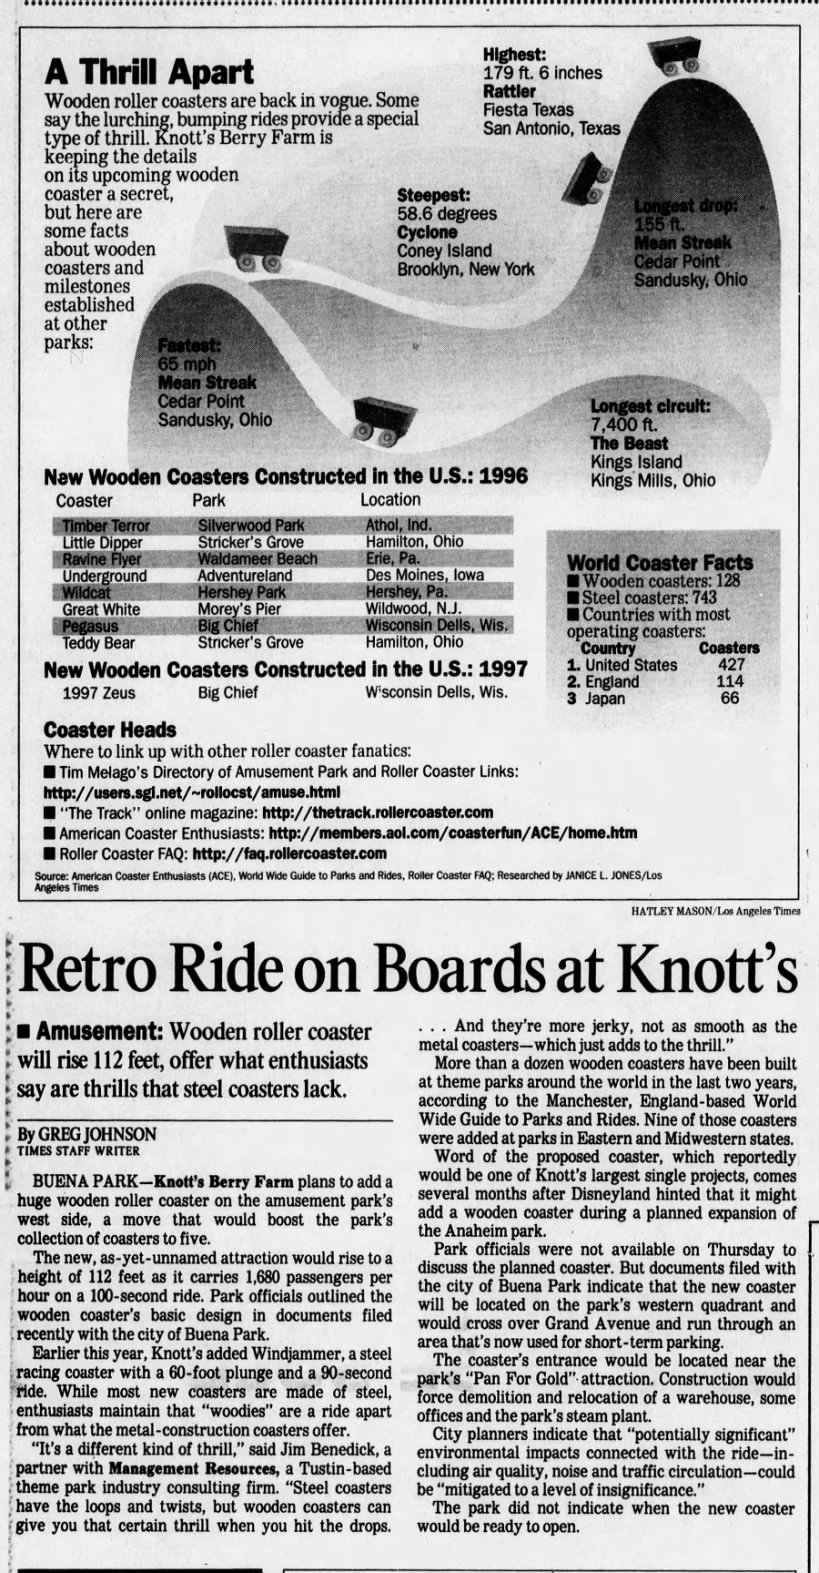 A Thrill Apart: Retro Ride on Boards at Knott's